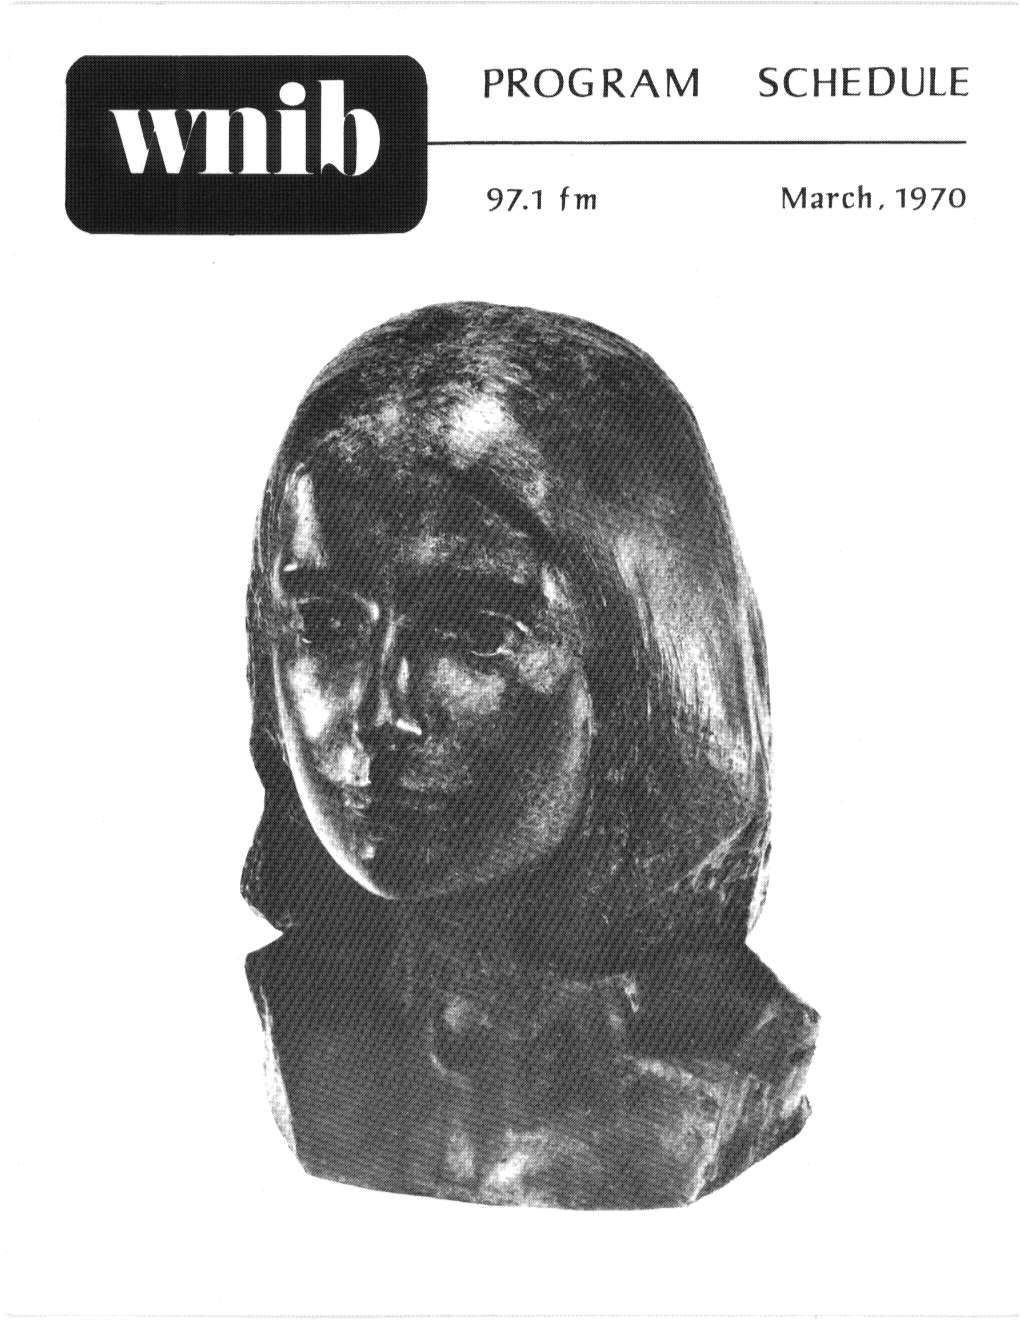 WNIB Program Schedule March 1970